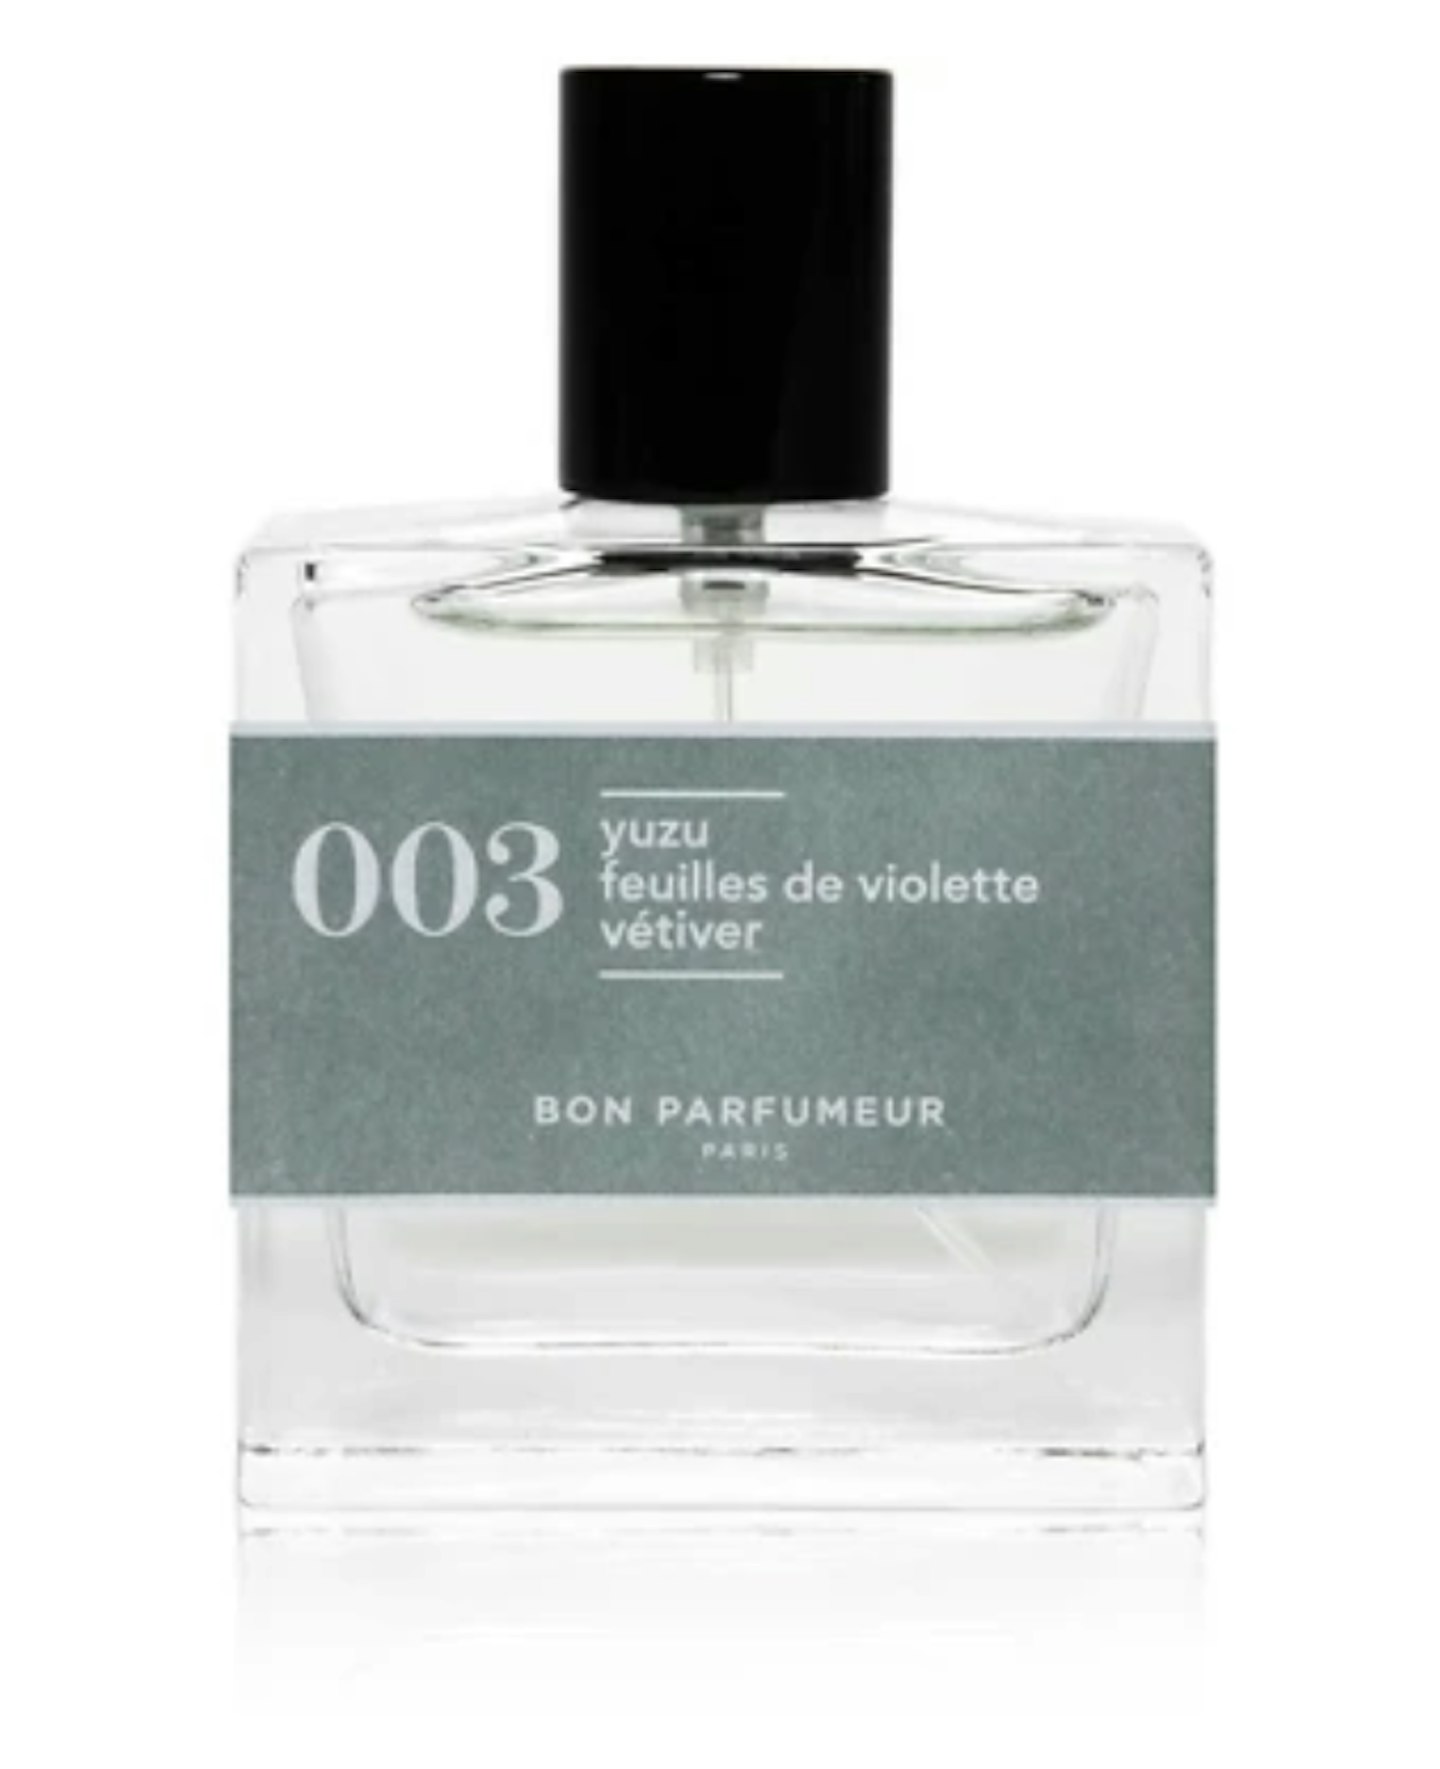 Bon Parfumeur  - 003